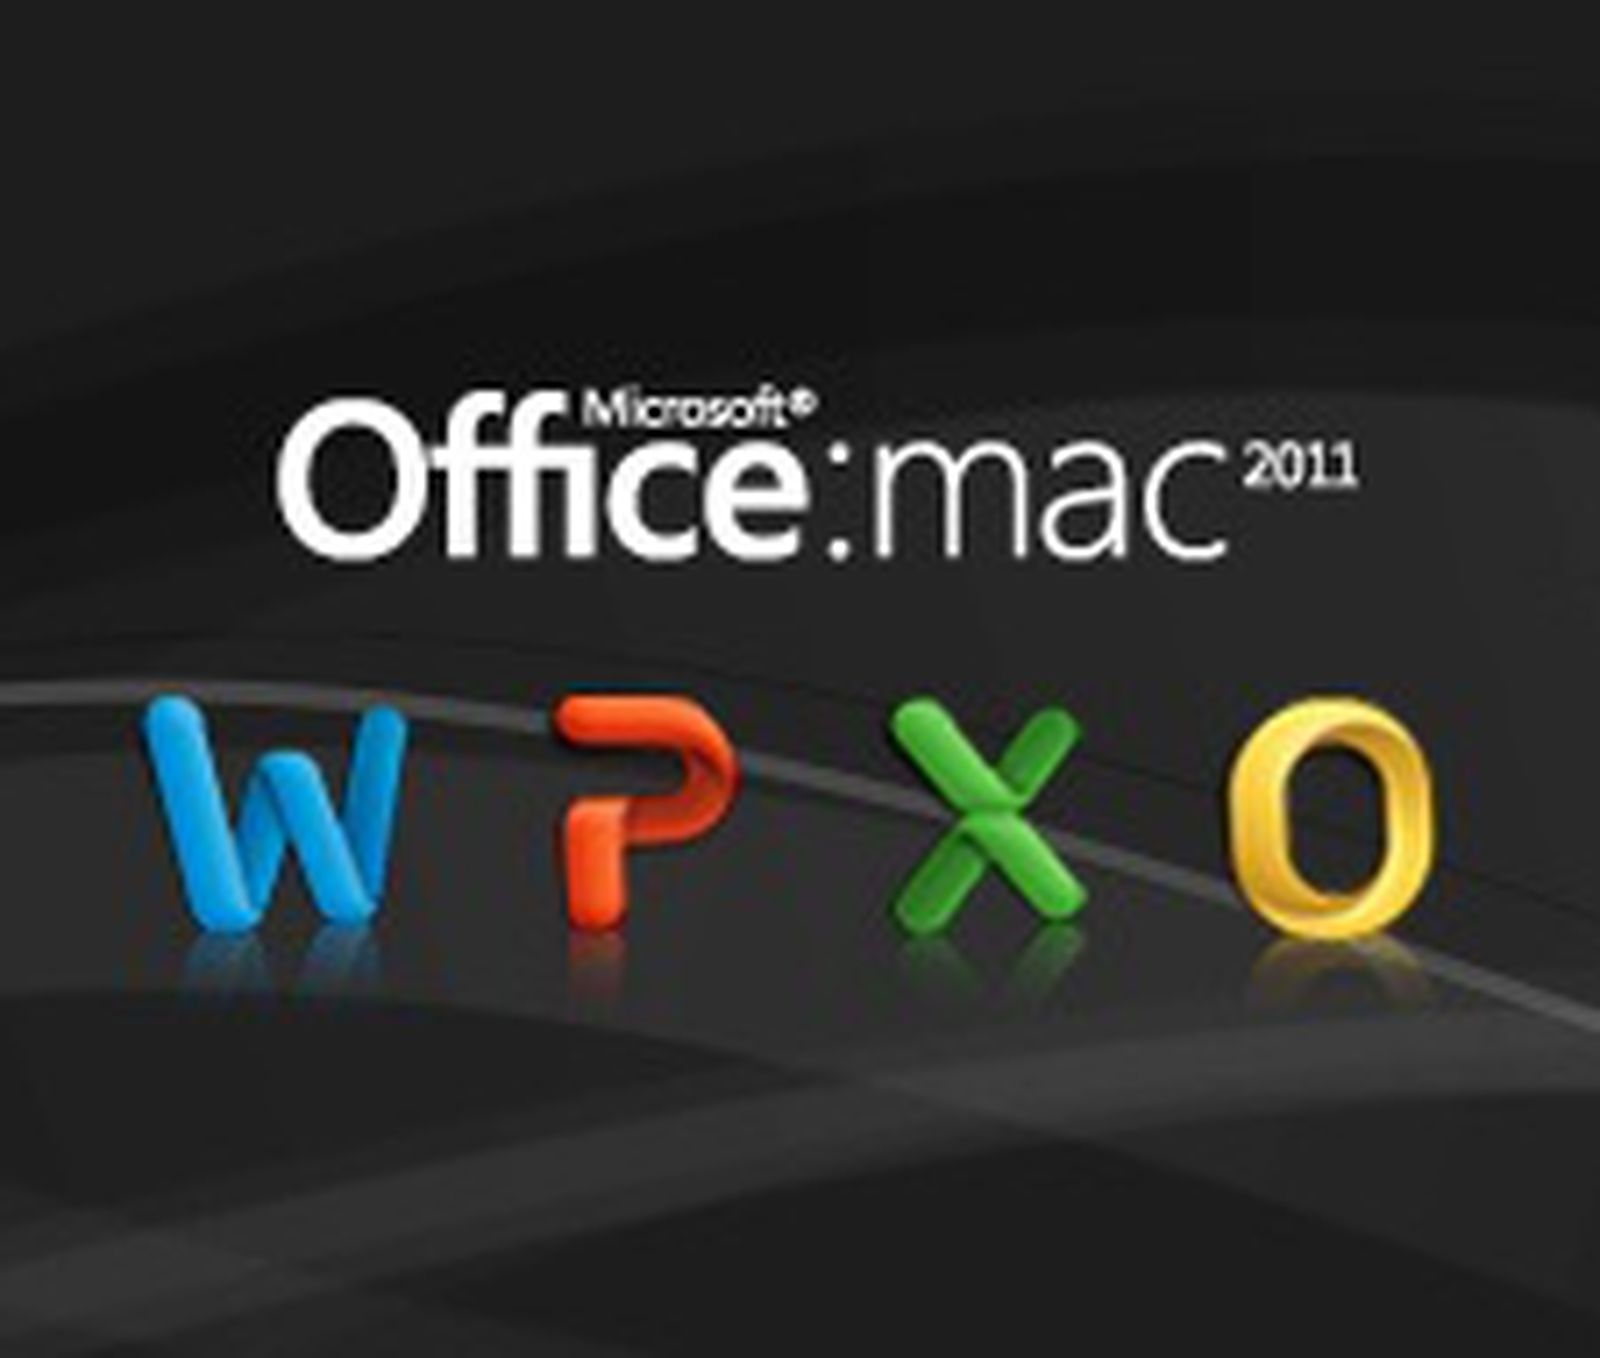 Ms office для mac. MS Office 2011 Mac os. Офис 2011. Microsoft Office 2011 for Mac. Microsoft Office 2011.